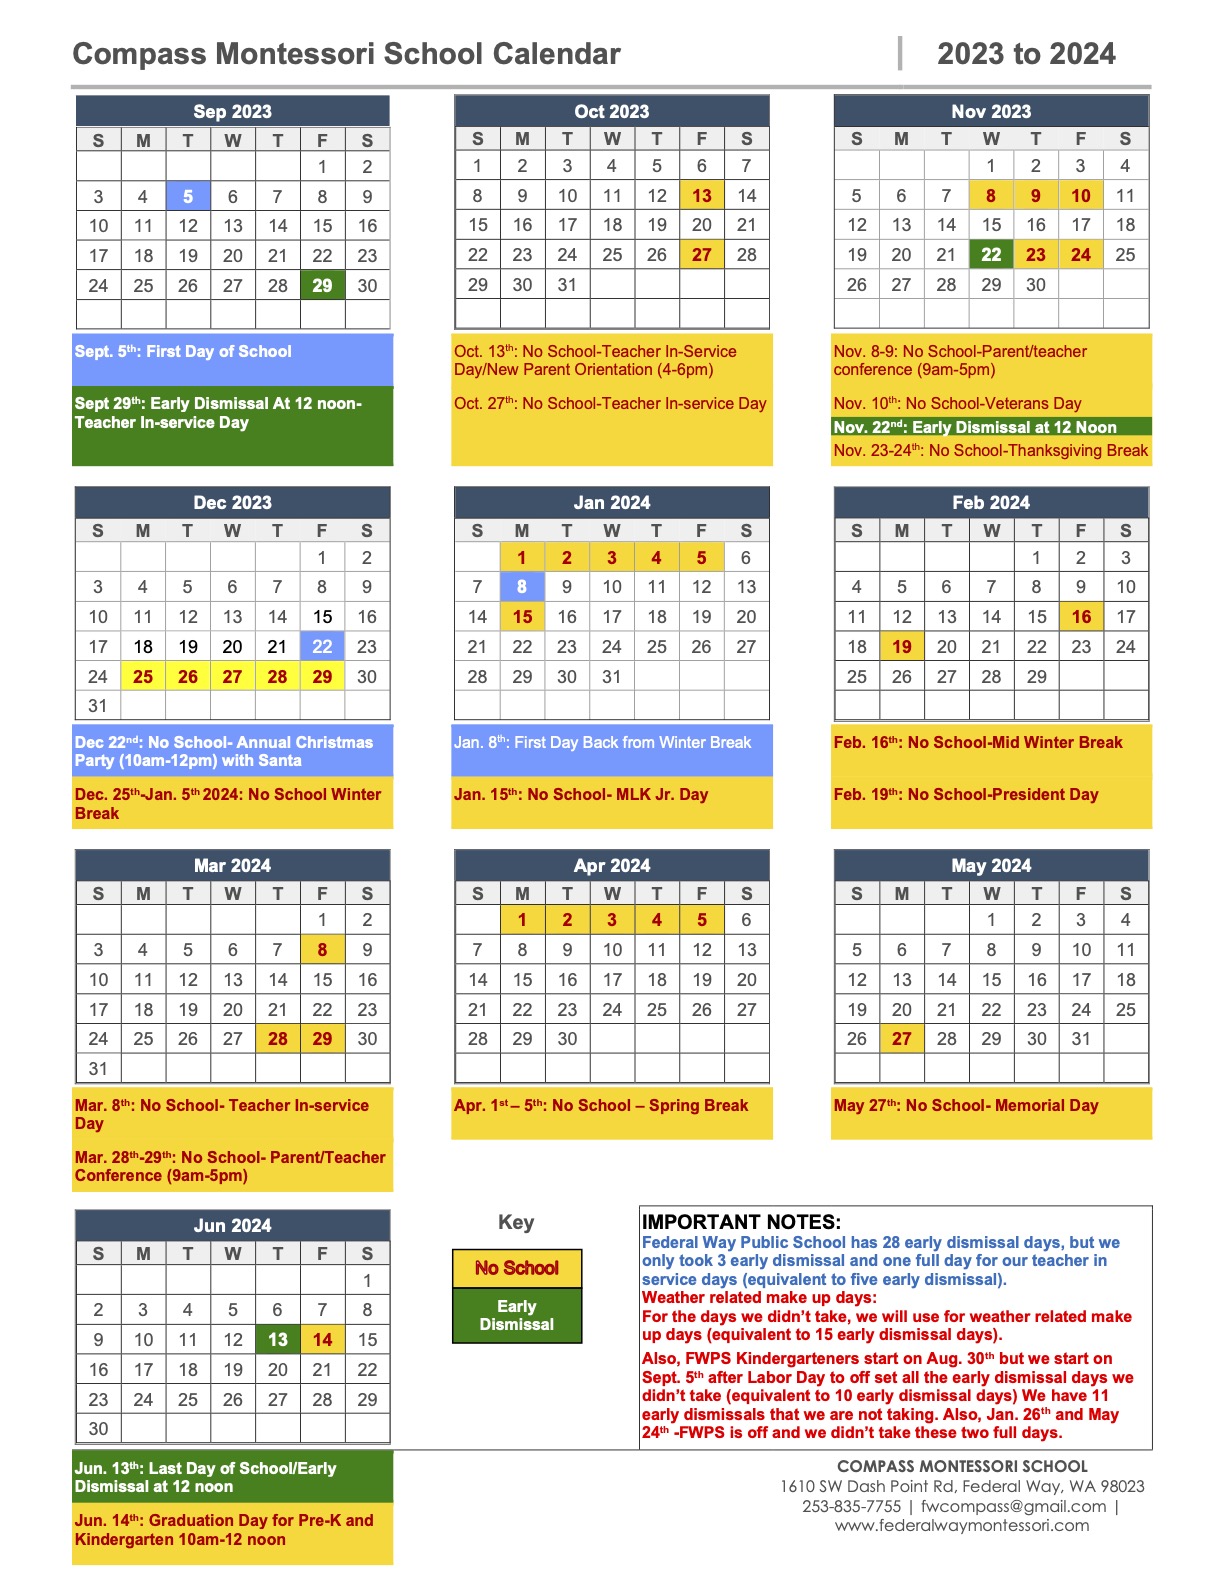 20232024 School Calendar Compass Montessori School of Federal Way